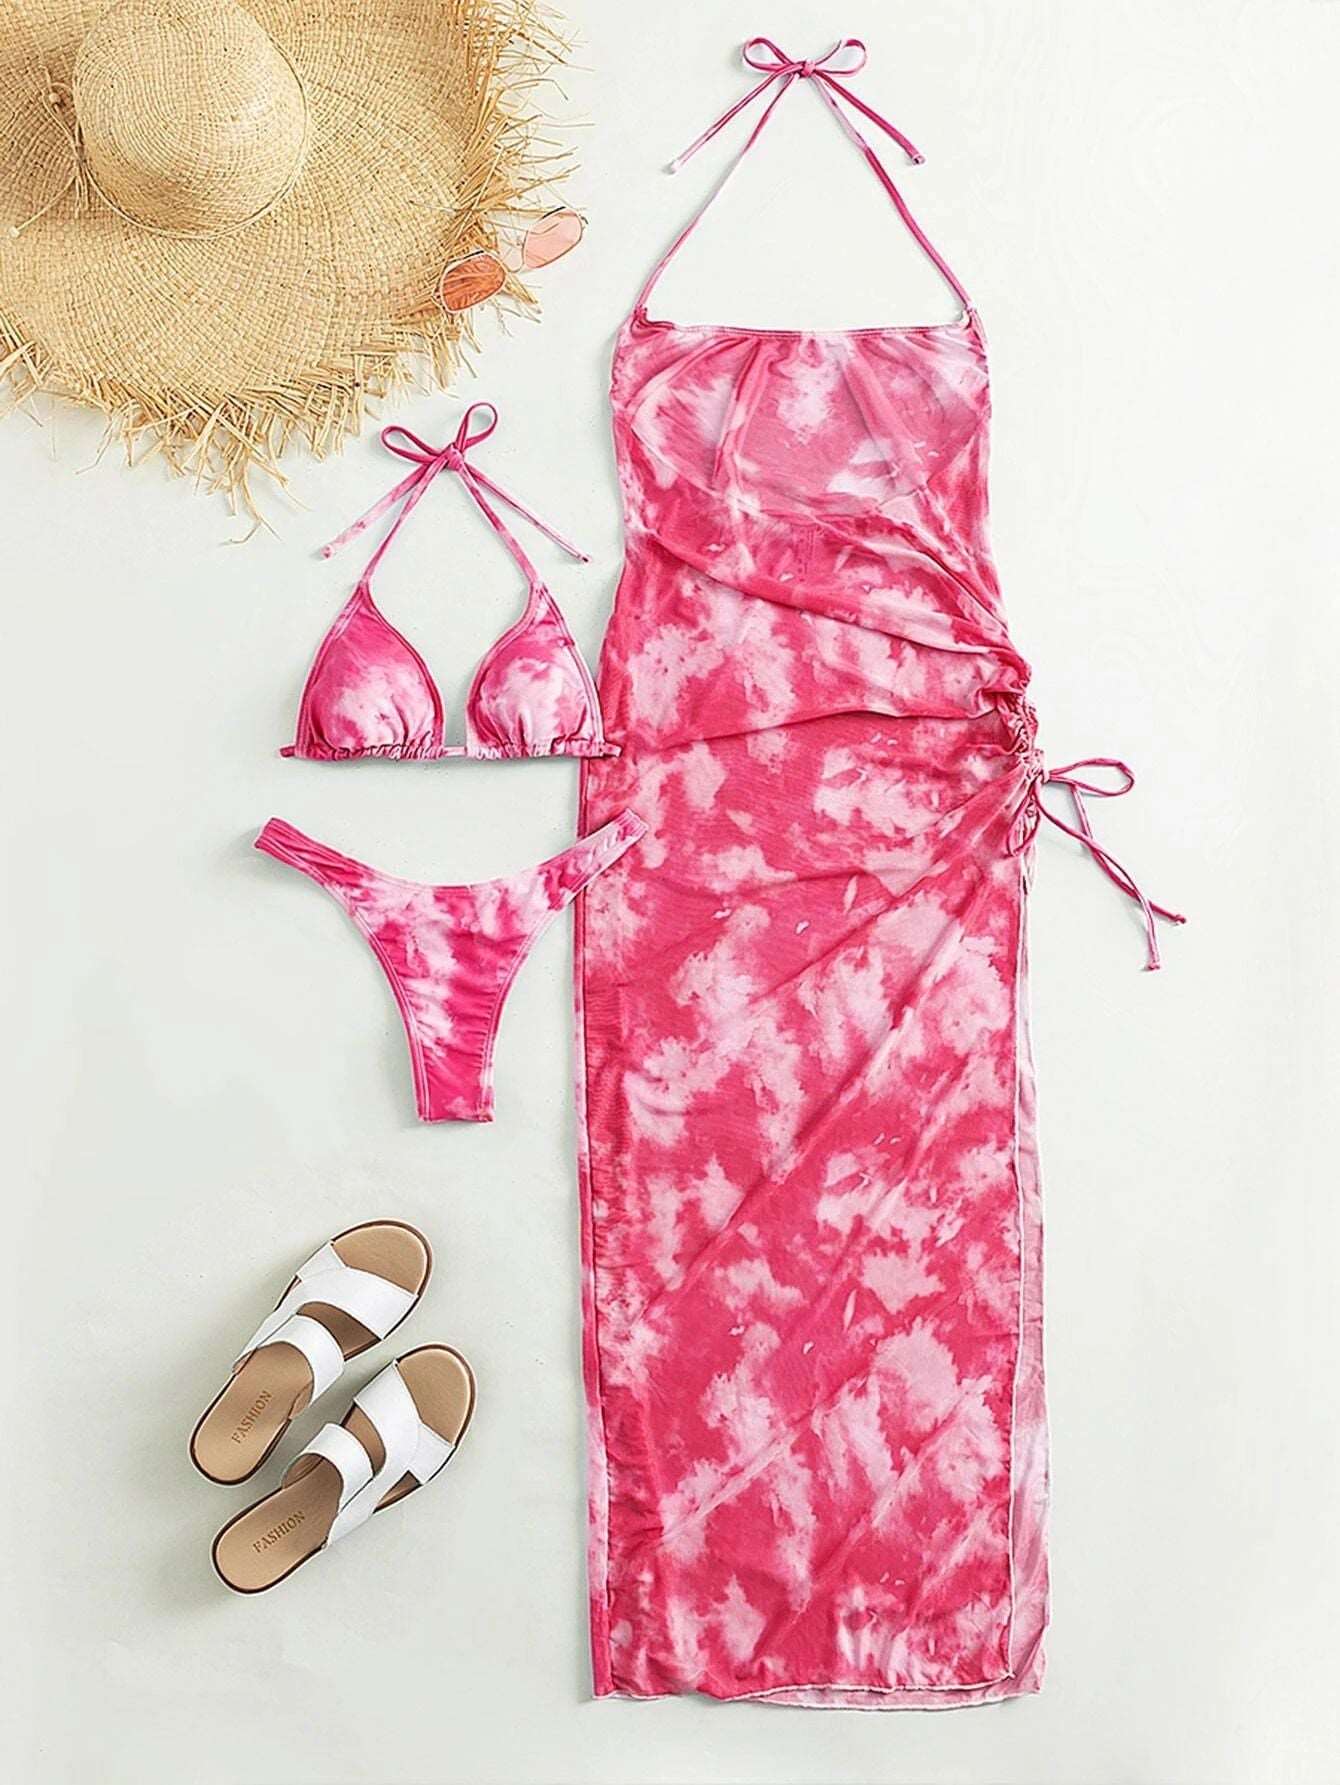 3 Pack Tie Dye Triangle Bikini Set Swimsuit Women Cover Up Swimwear Summer Beach Bathing Suit Bikinis